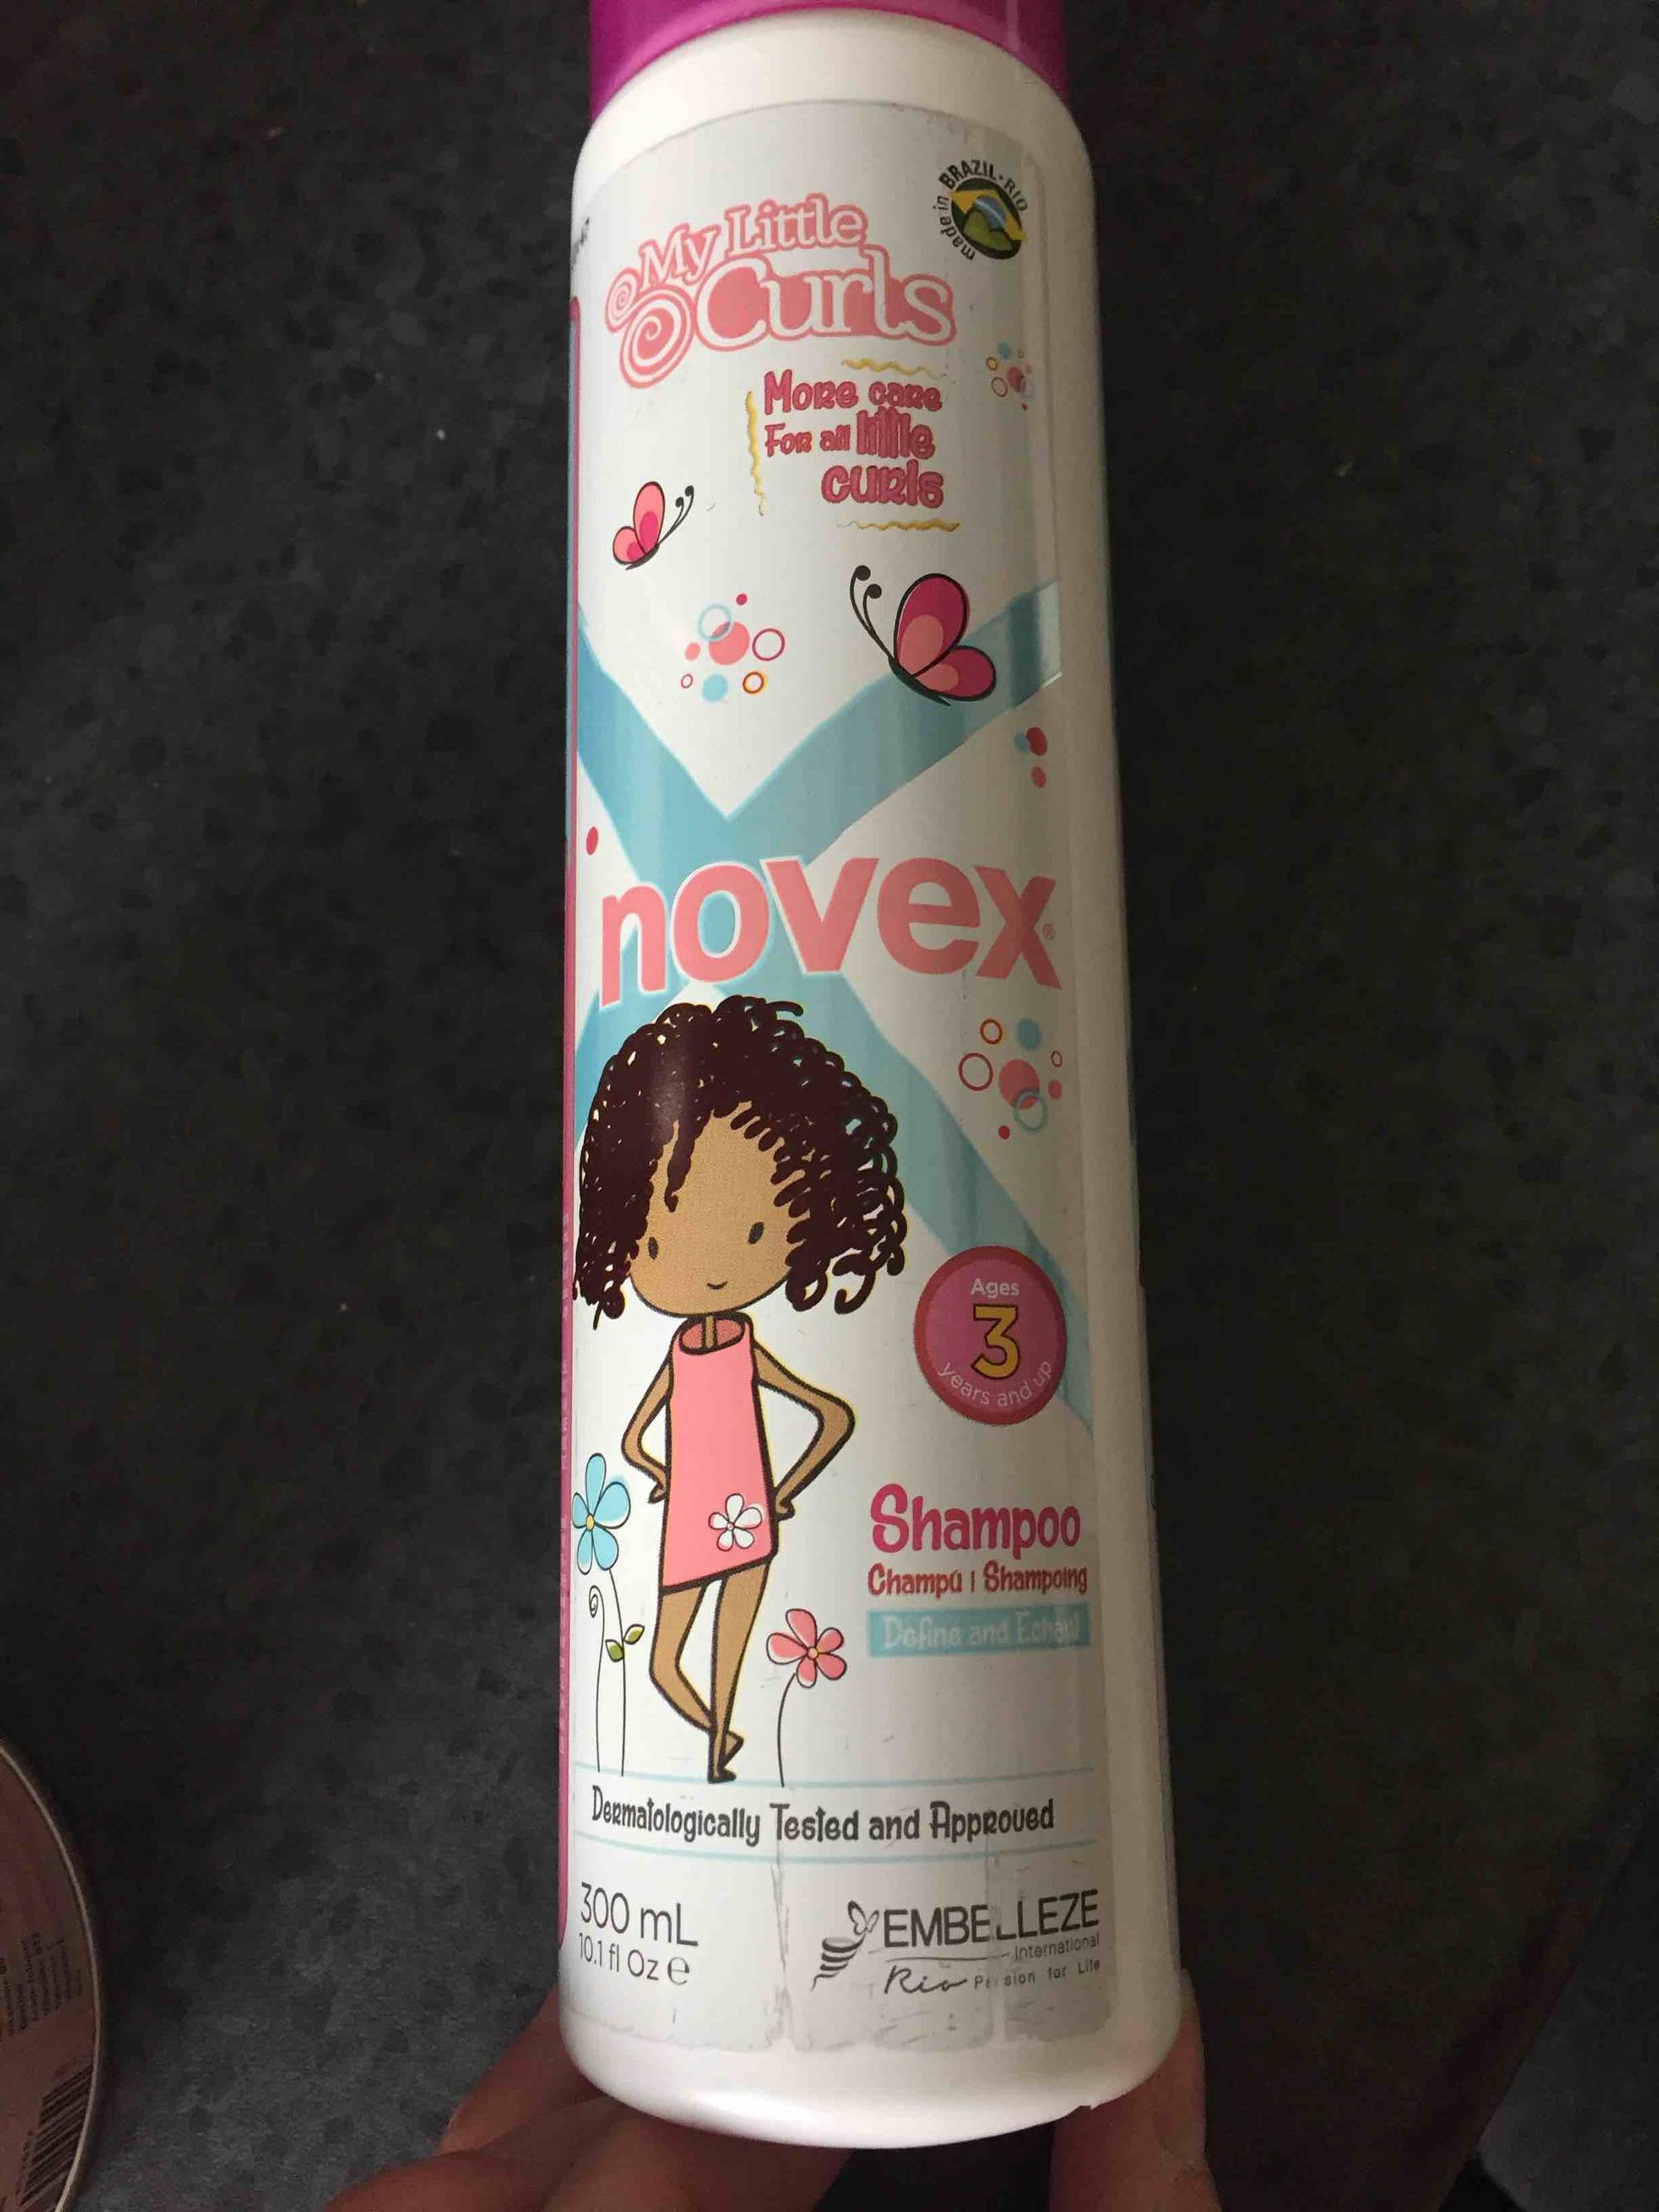 NOVEX - My little curls - Shampoo